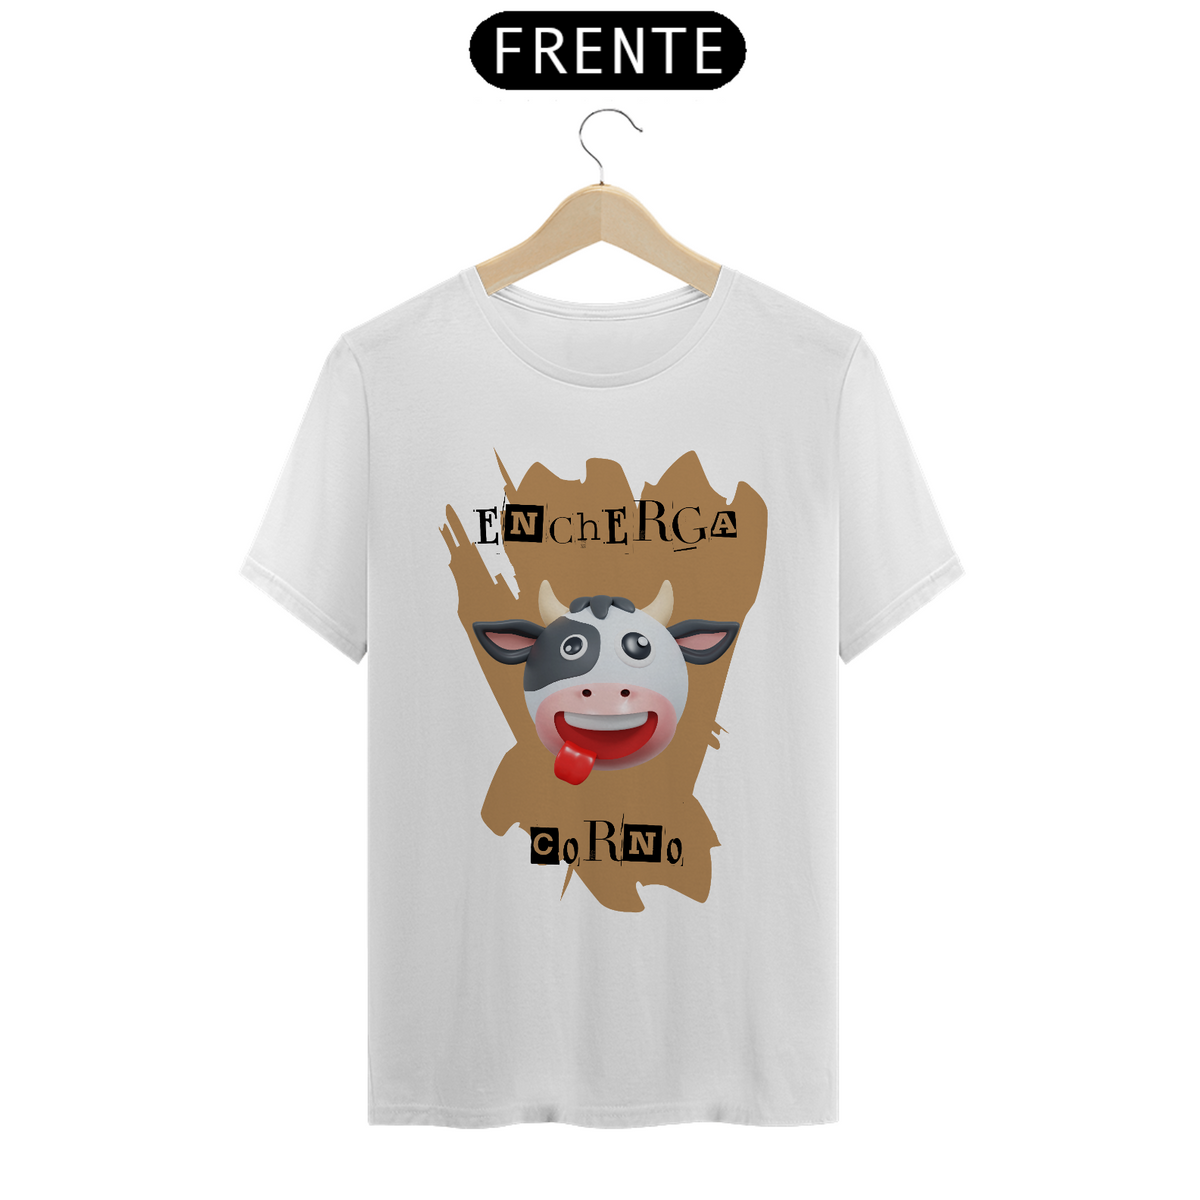 Nome do produto: Camiseta T-Shirt Classic Unissex / Enchega Corno 